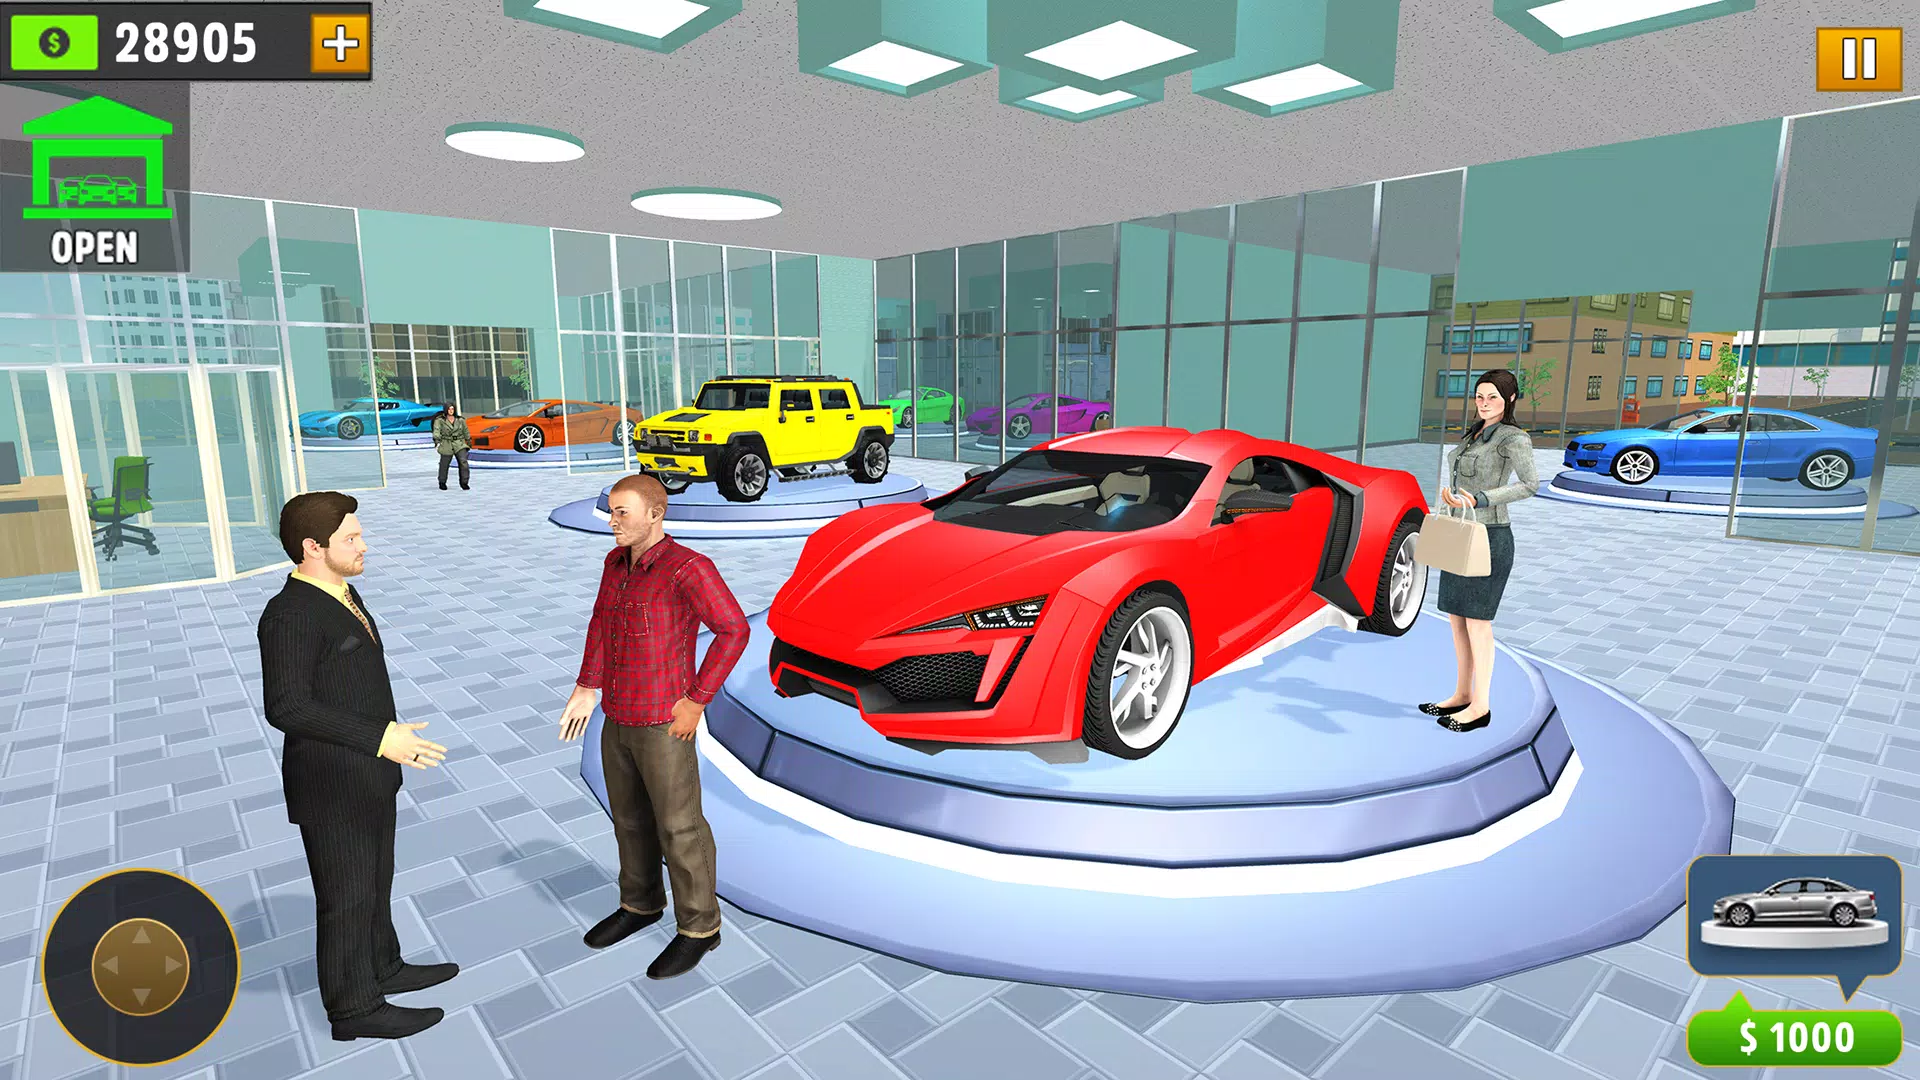 Dealership Simulator 🚗 - Roblox